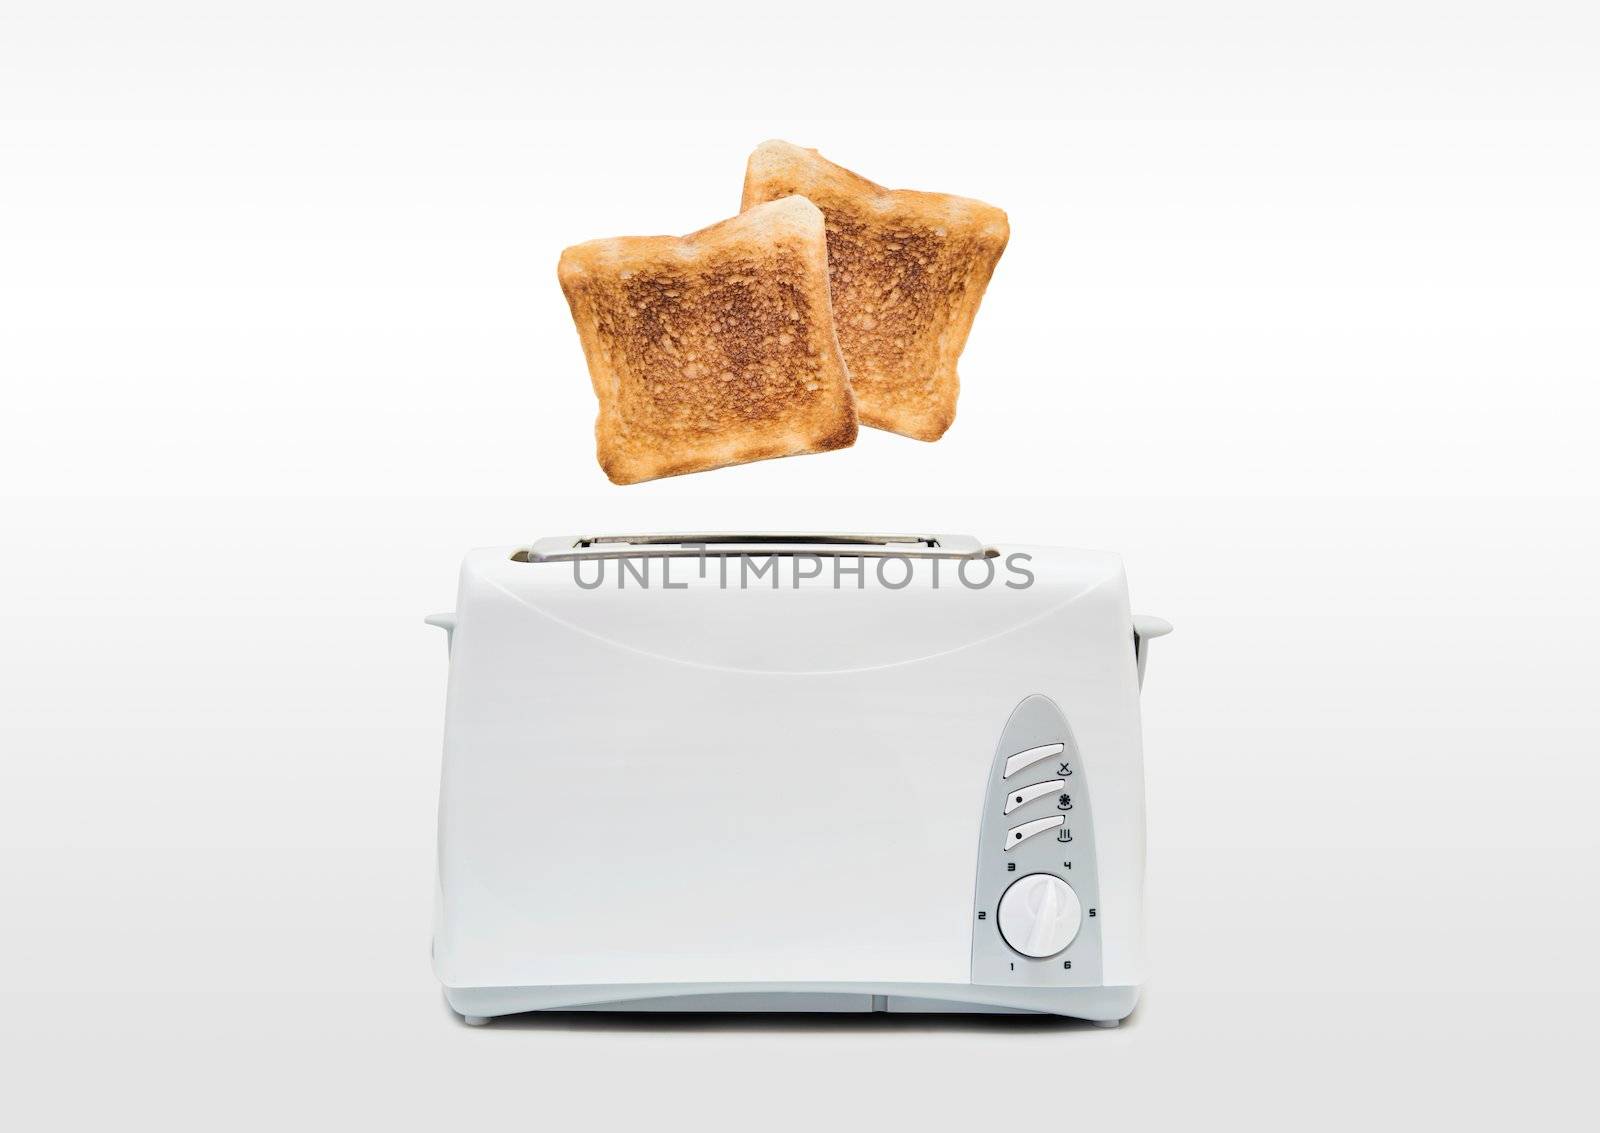 Jumping toasts. Preparing breakfast in modern toaster by simpson33